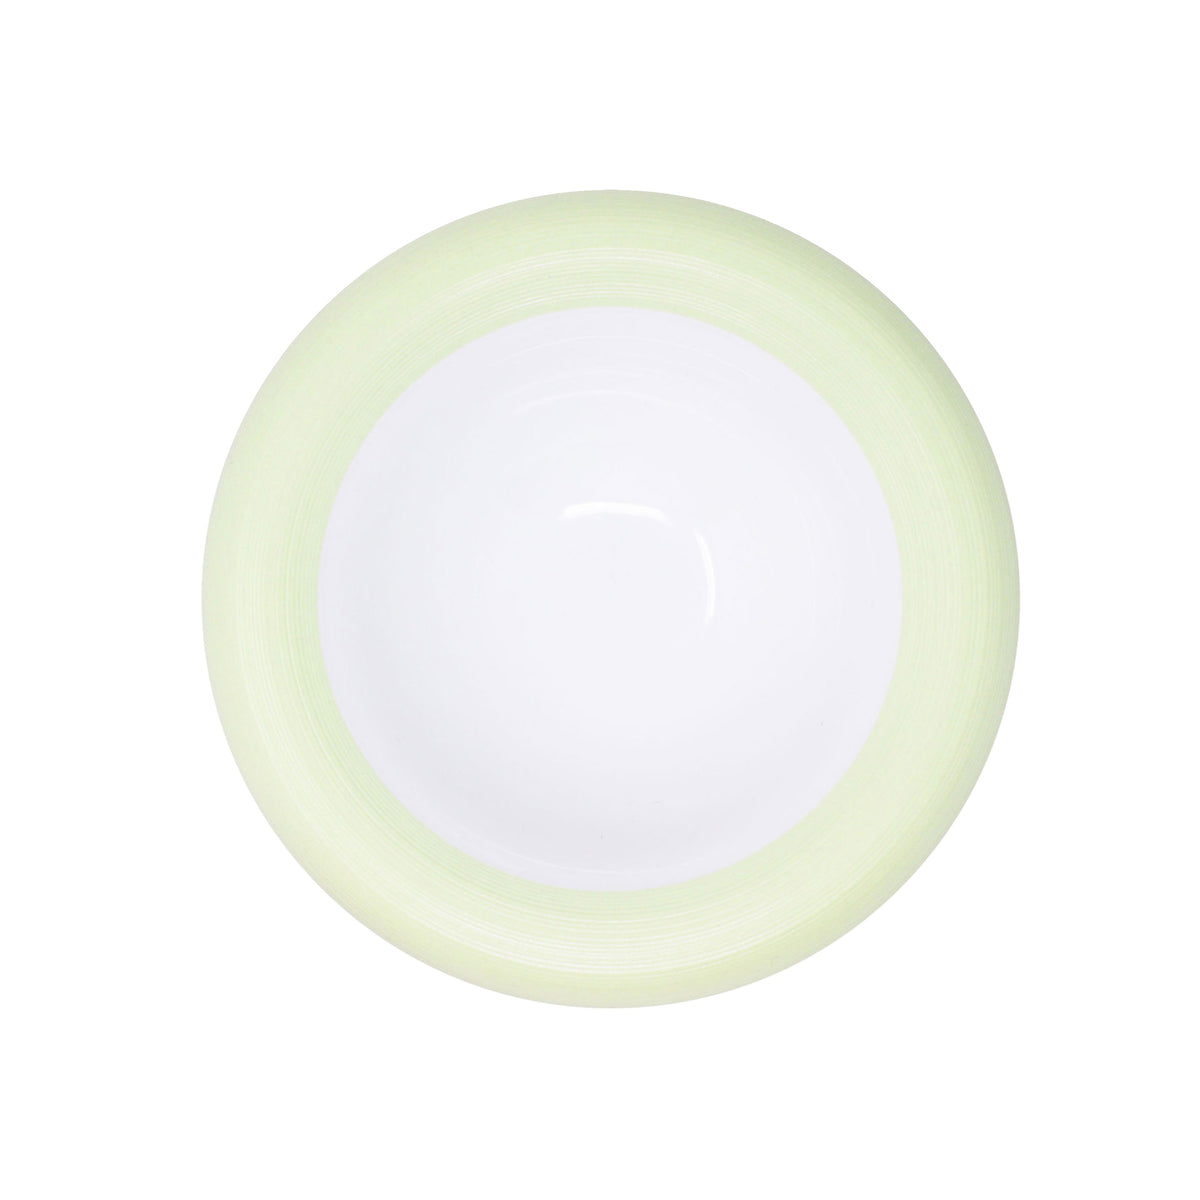 BABY HEMISPHERE Green - Plate Bubble 11 cm